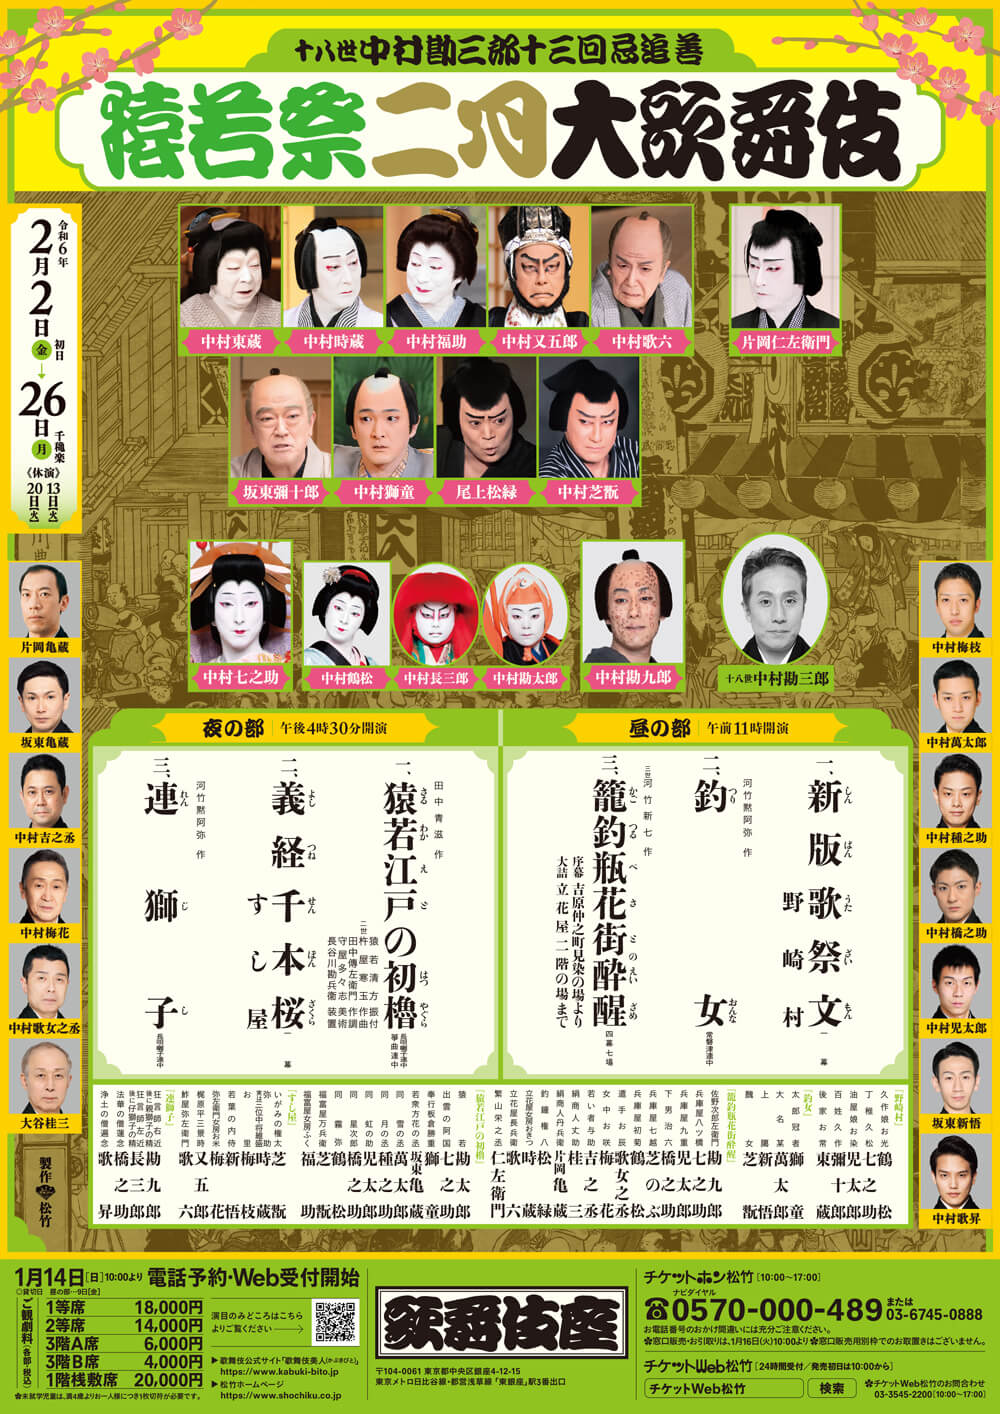 February Program at the kabukiza